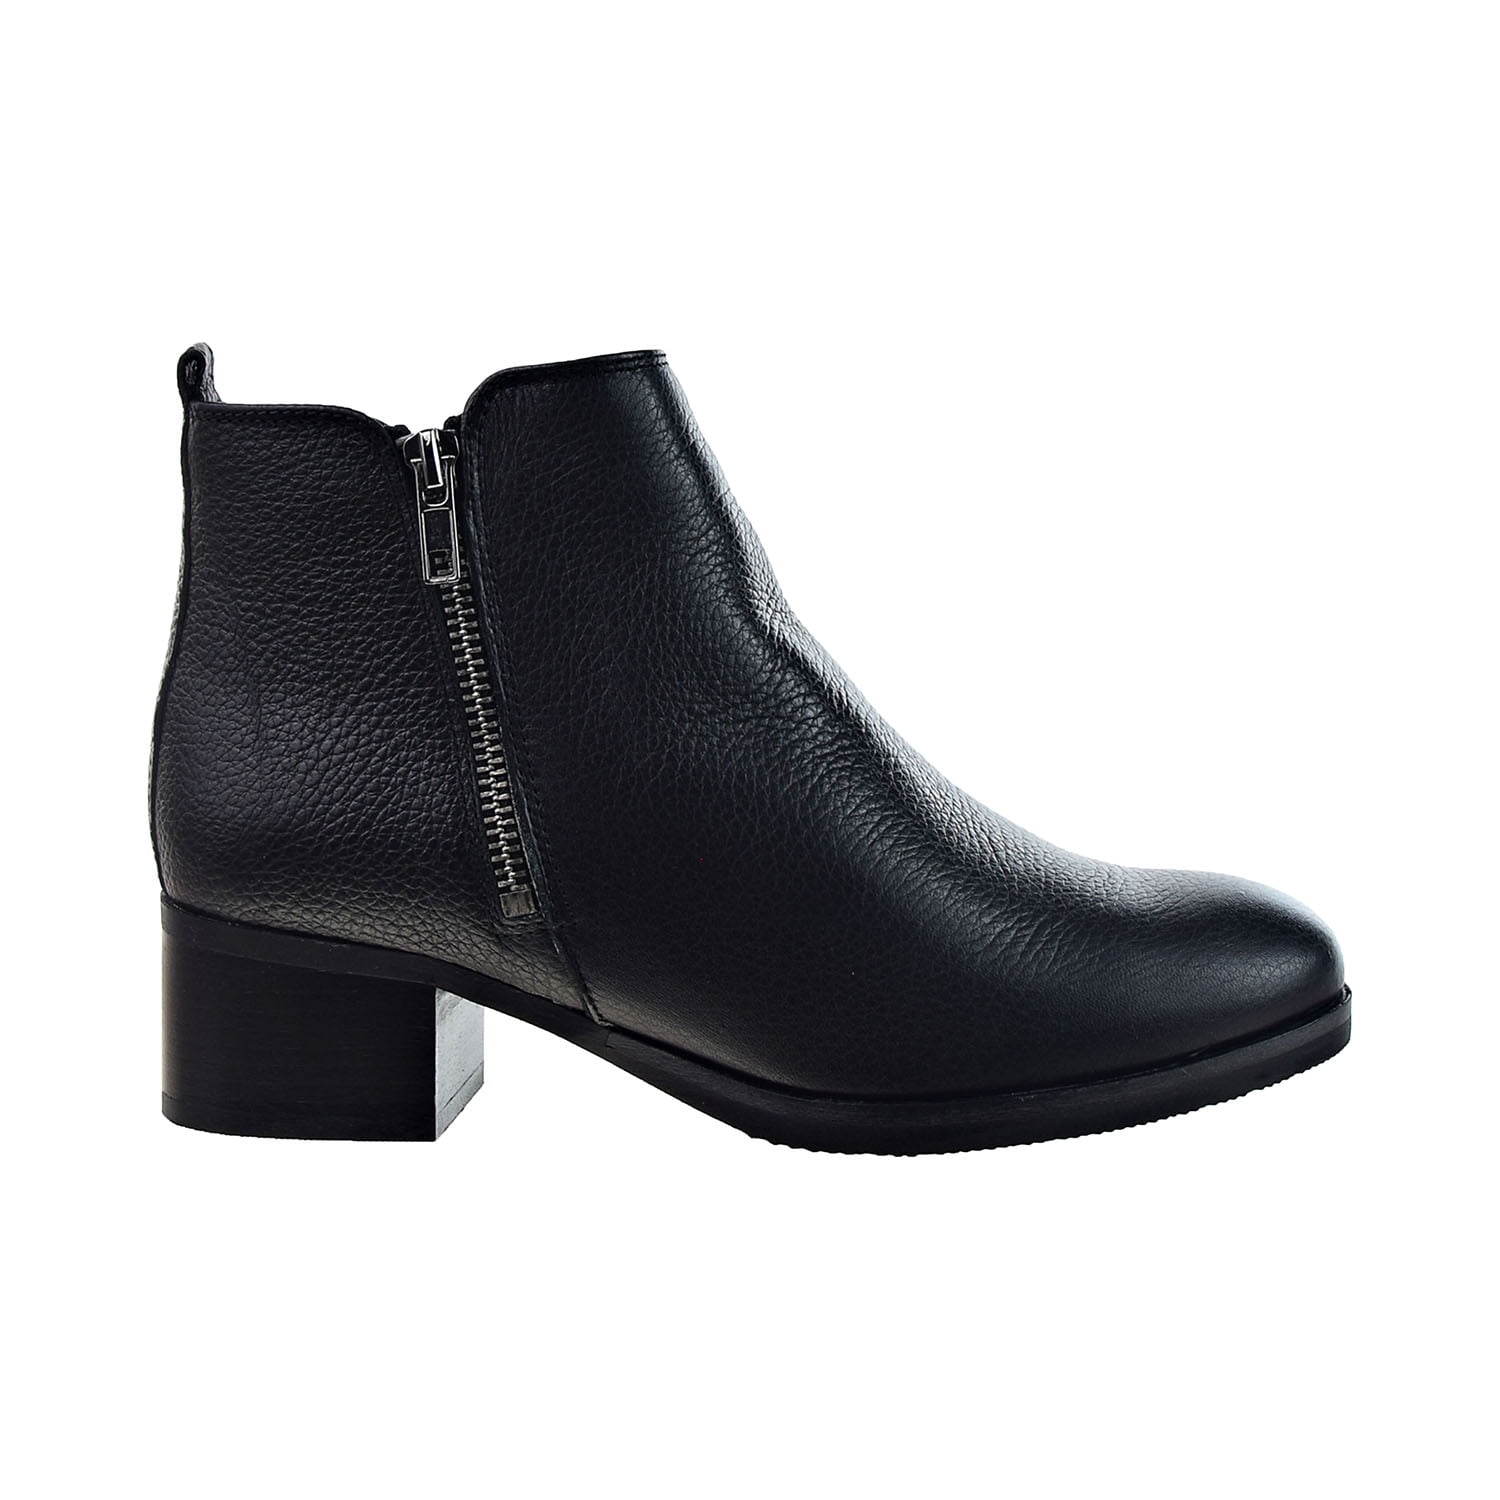 Clarks - Clarks Mila Sky Women's Ankle Boots Black Leather 26146790 ...